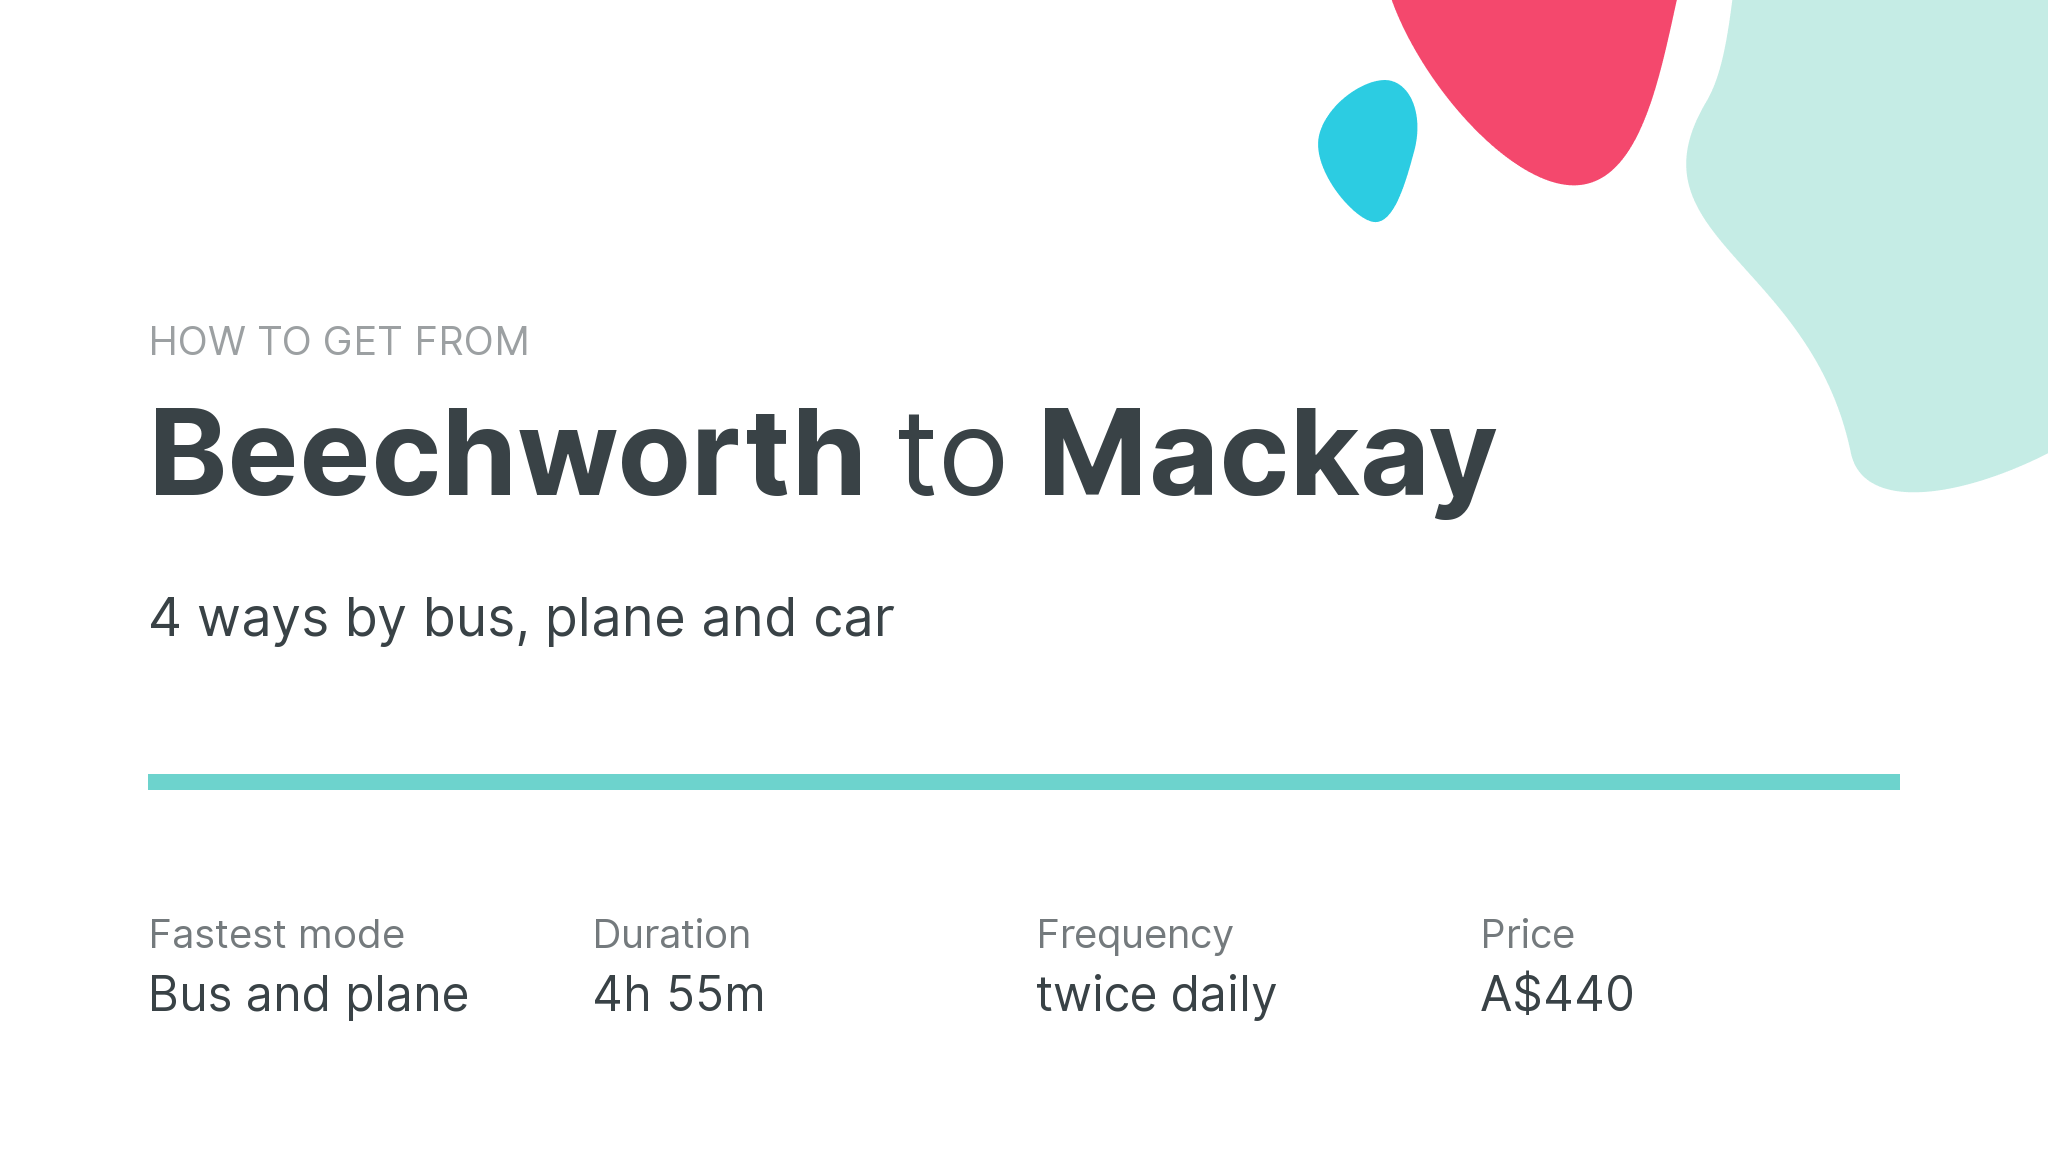 How do I get from Beechworth to Mackay